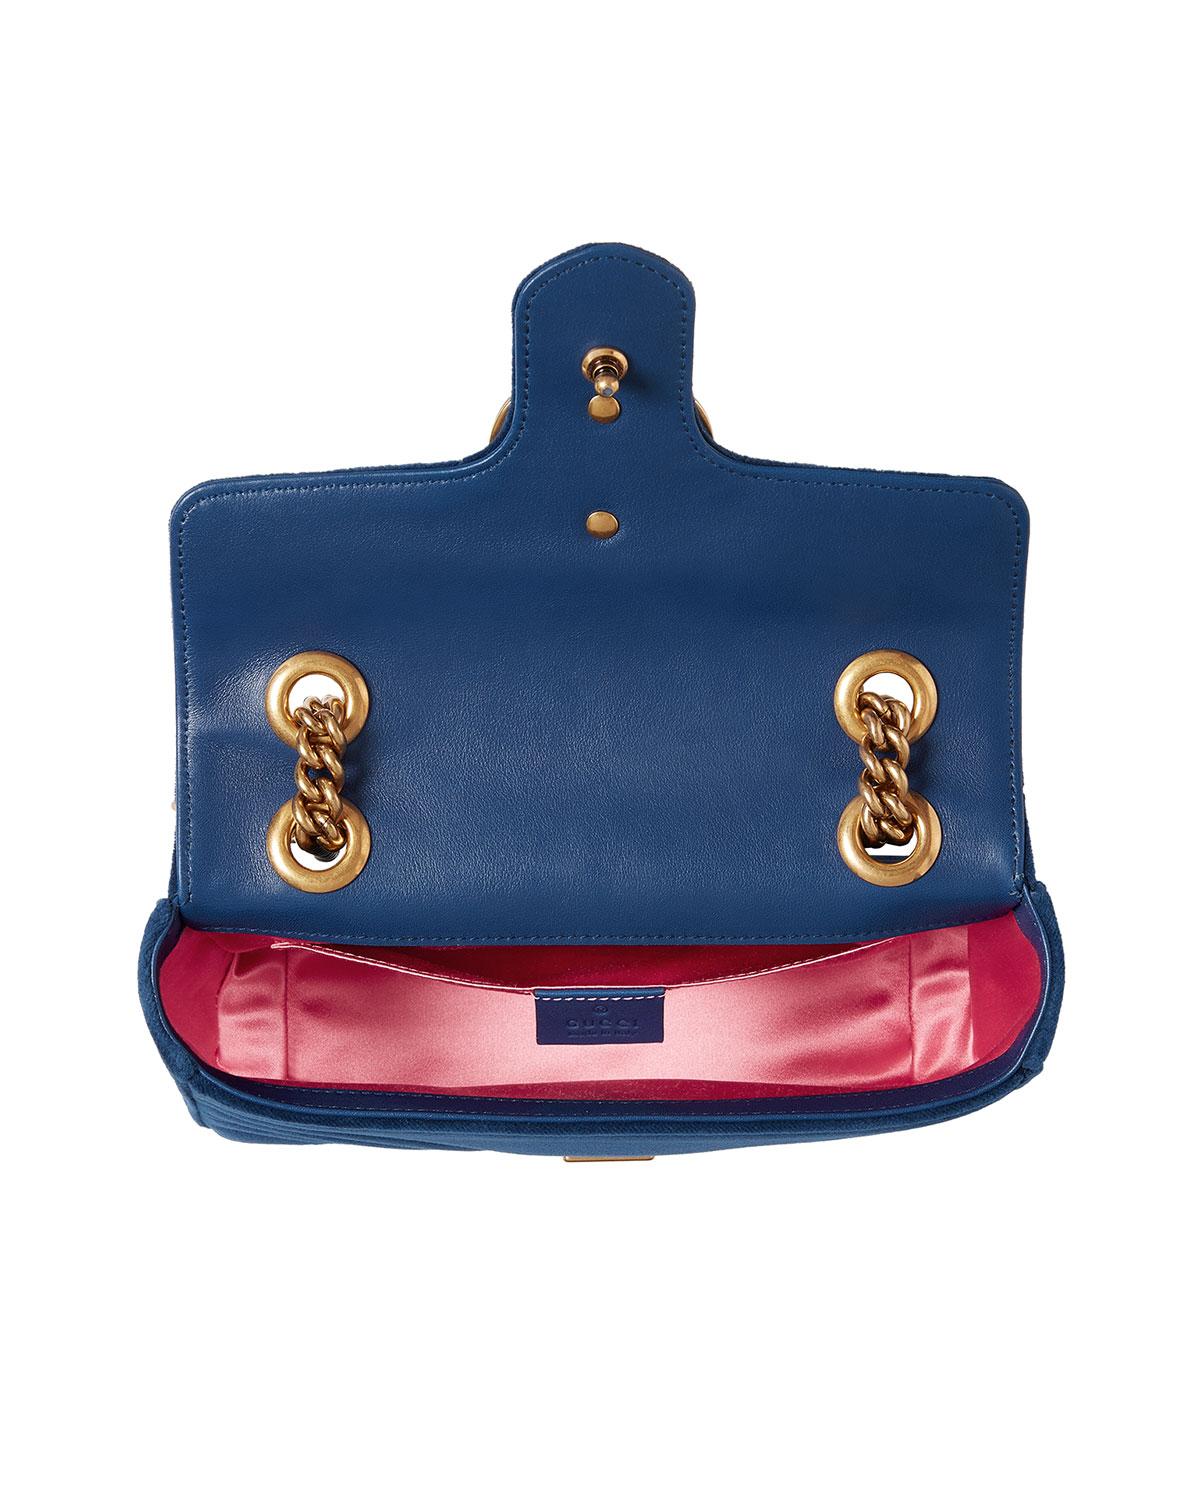 Gucci GG Marmont 2.0 Mini Velvet Shoulder Bag in Blue - Lyst